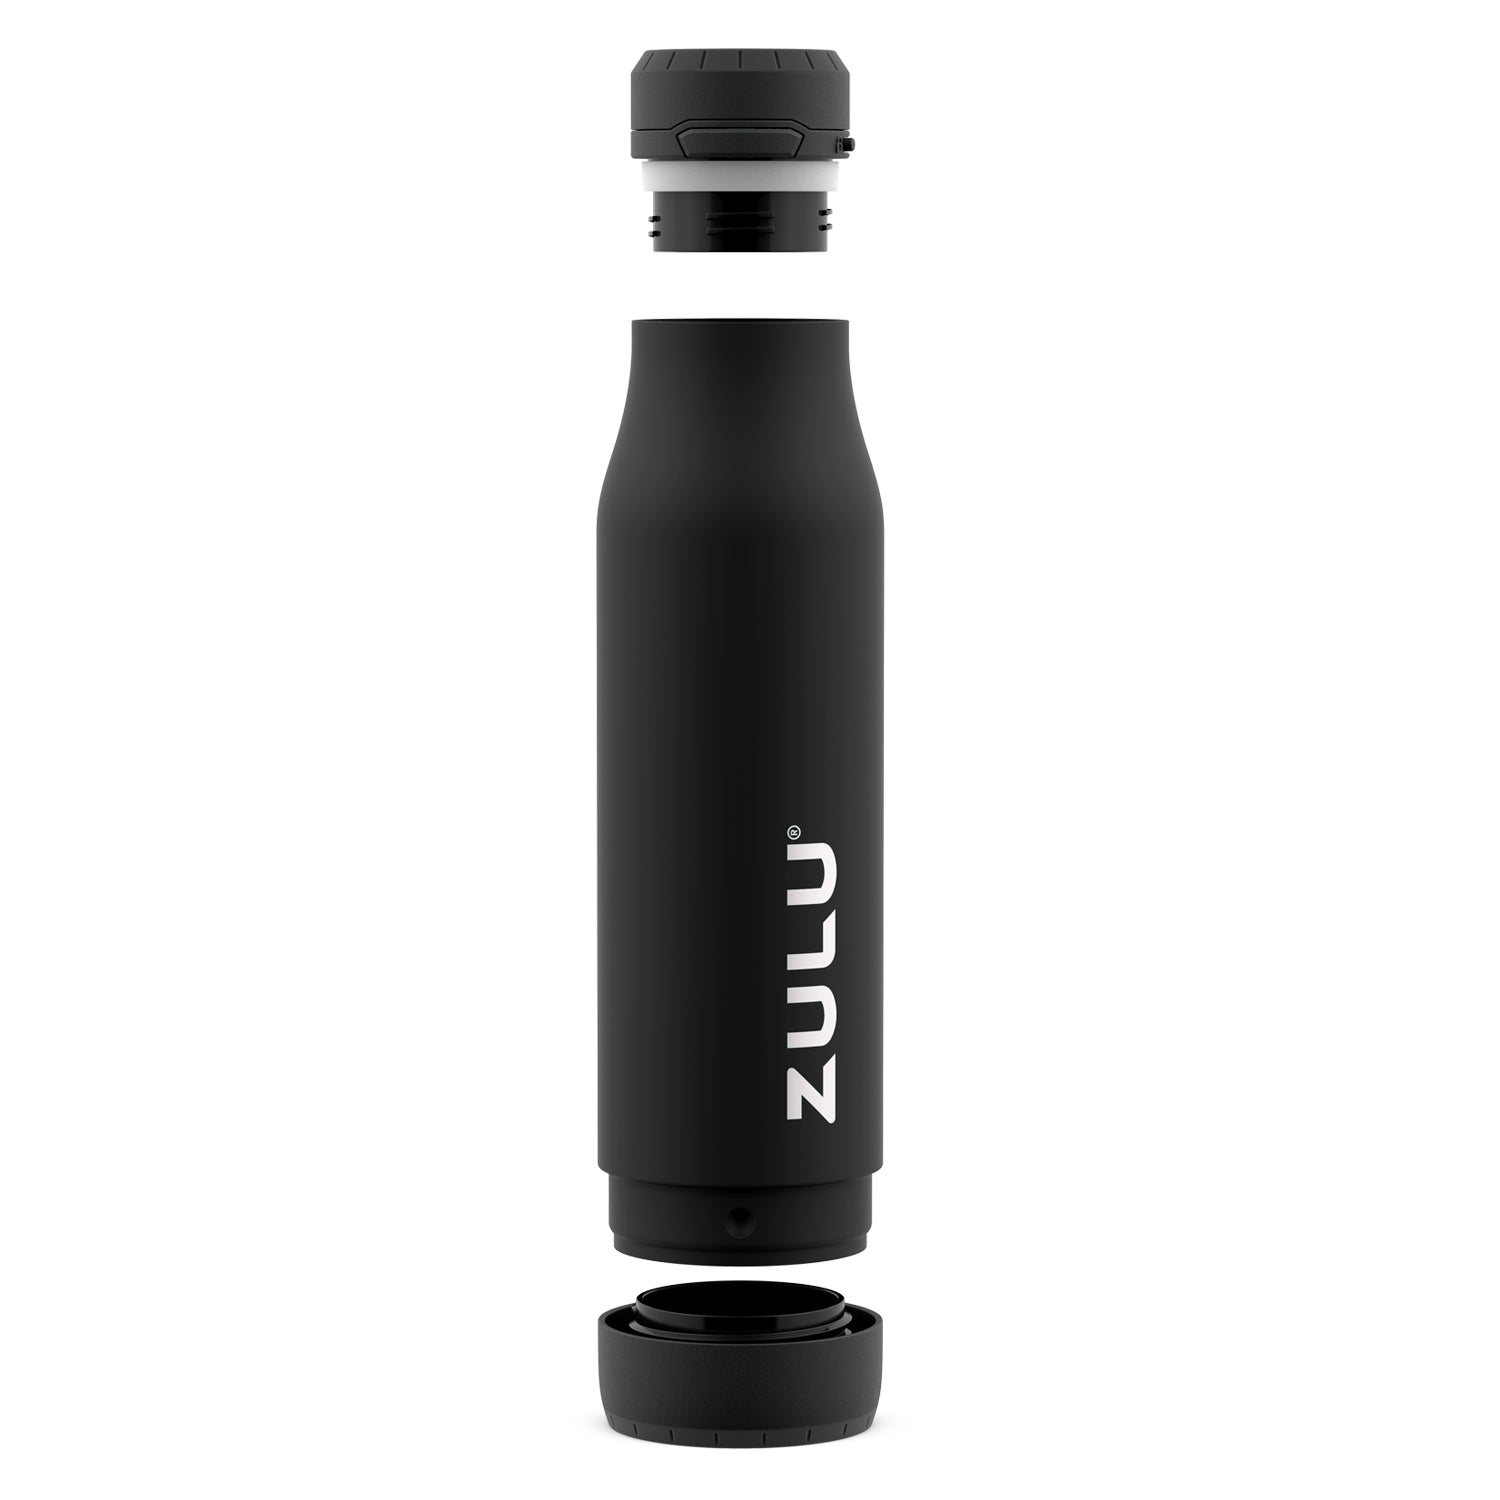 EDC Zulu 32 oz stainless steel water bottle review 